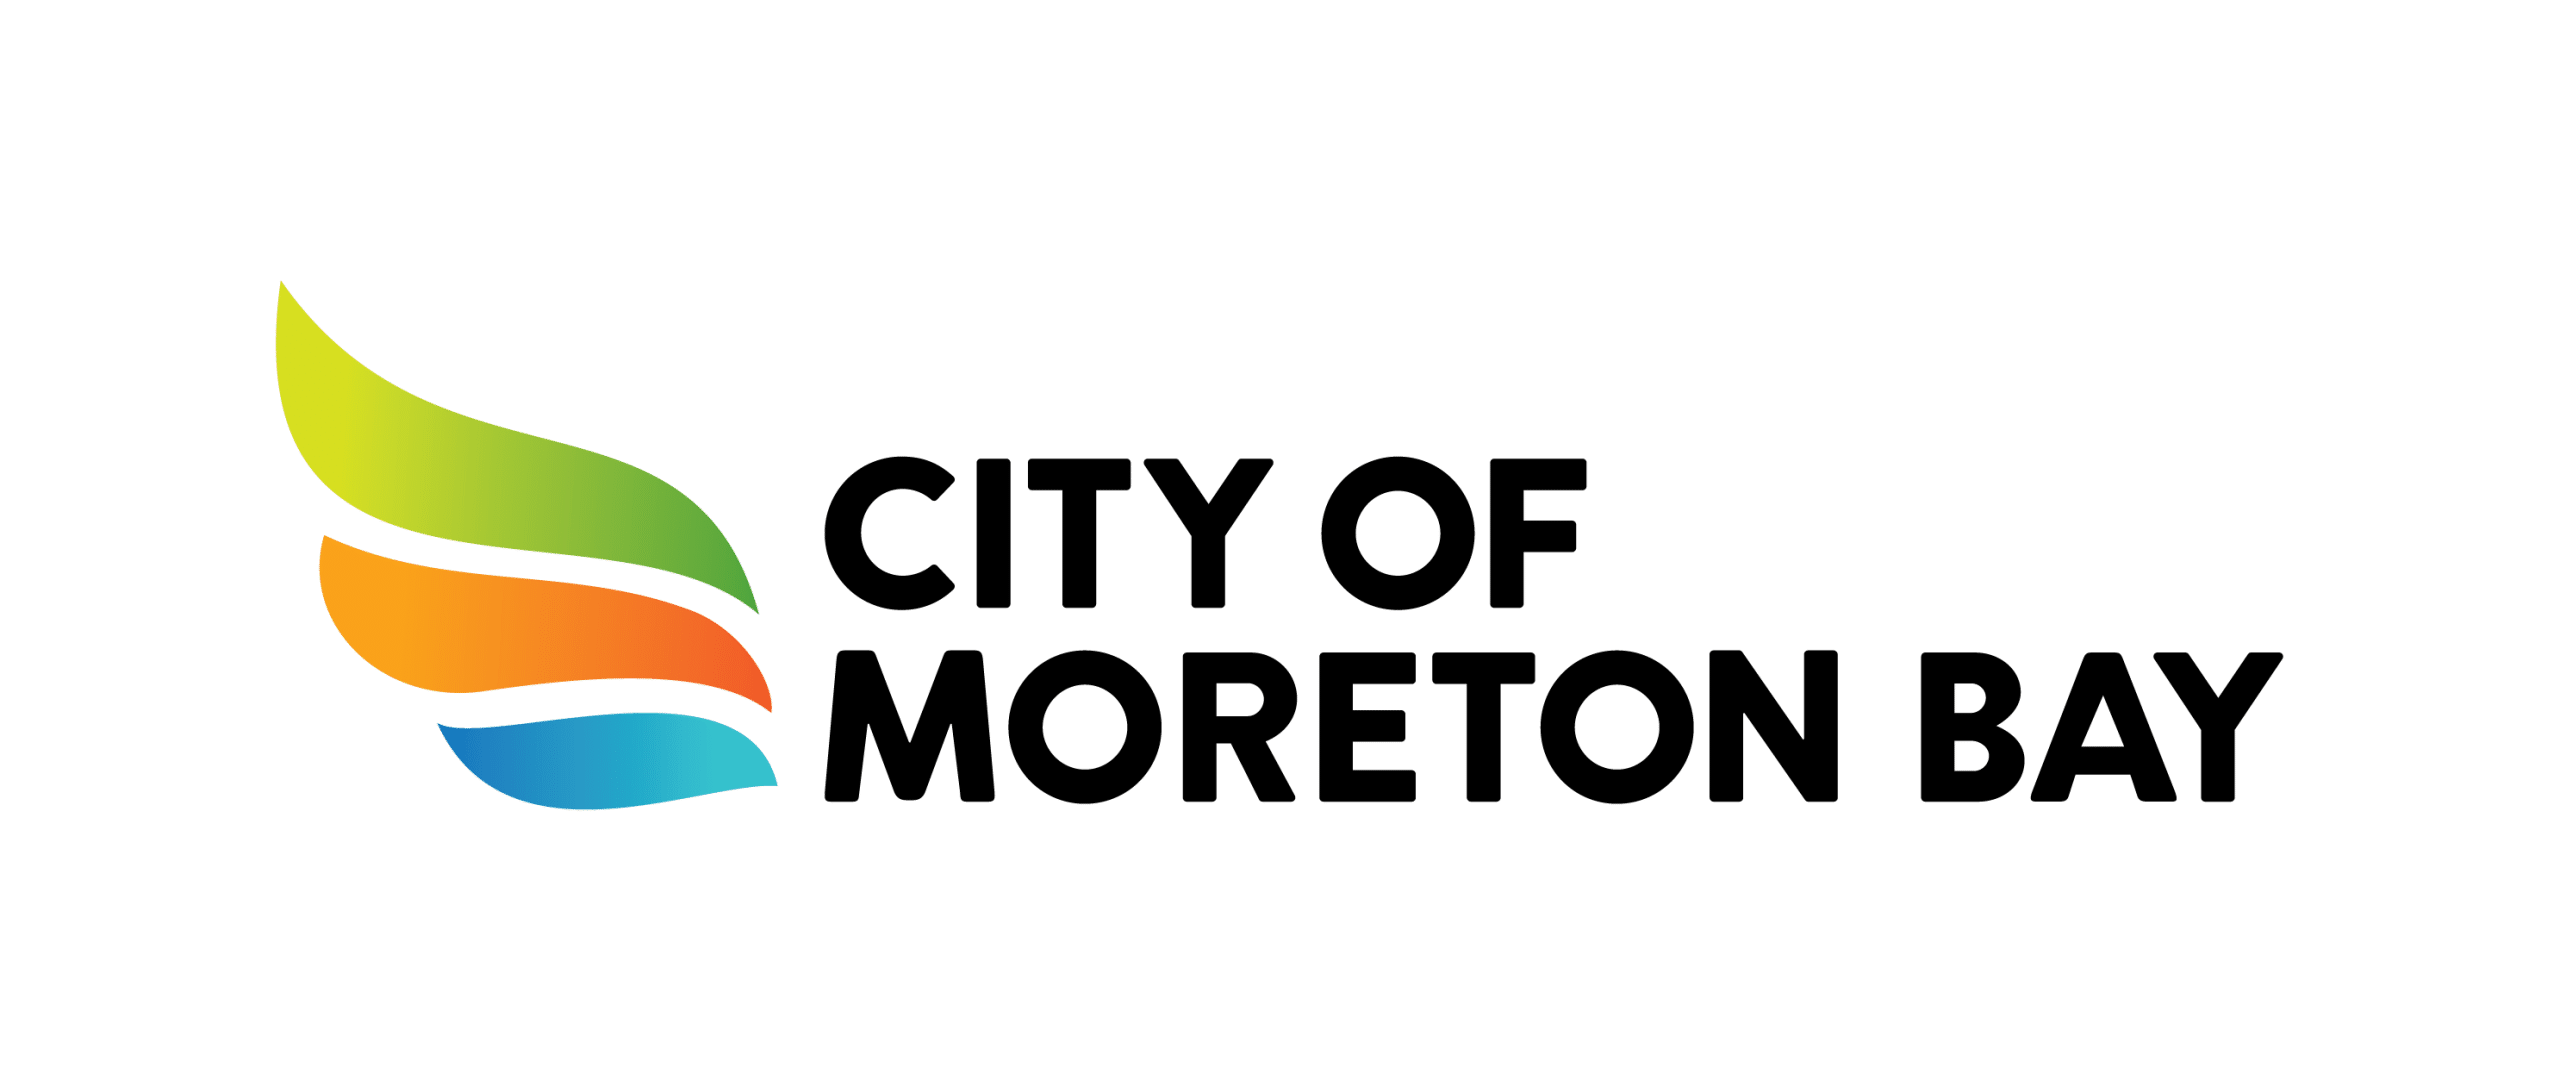 City of Moreton Bay 